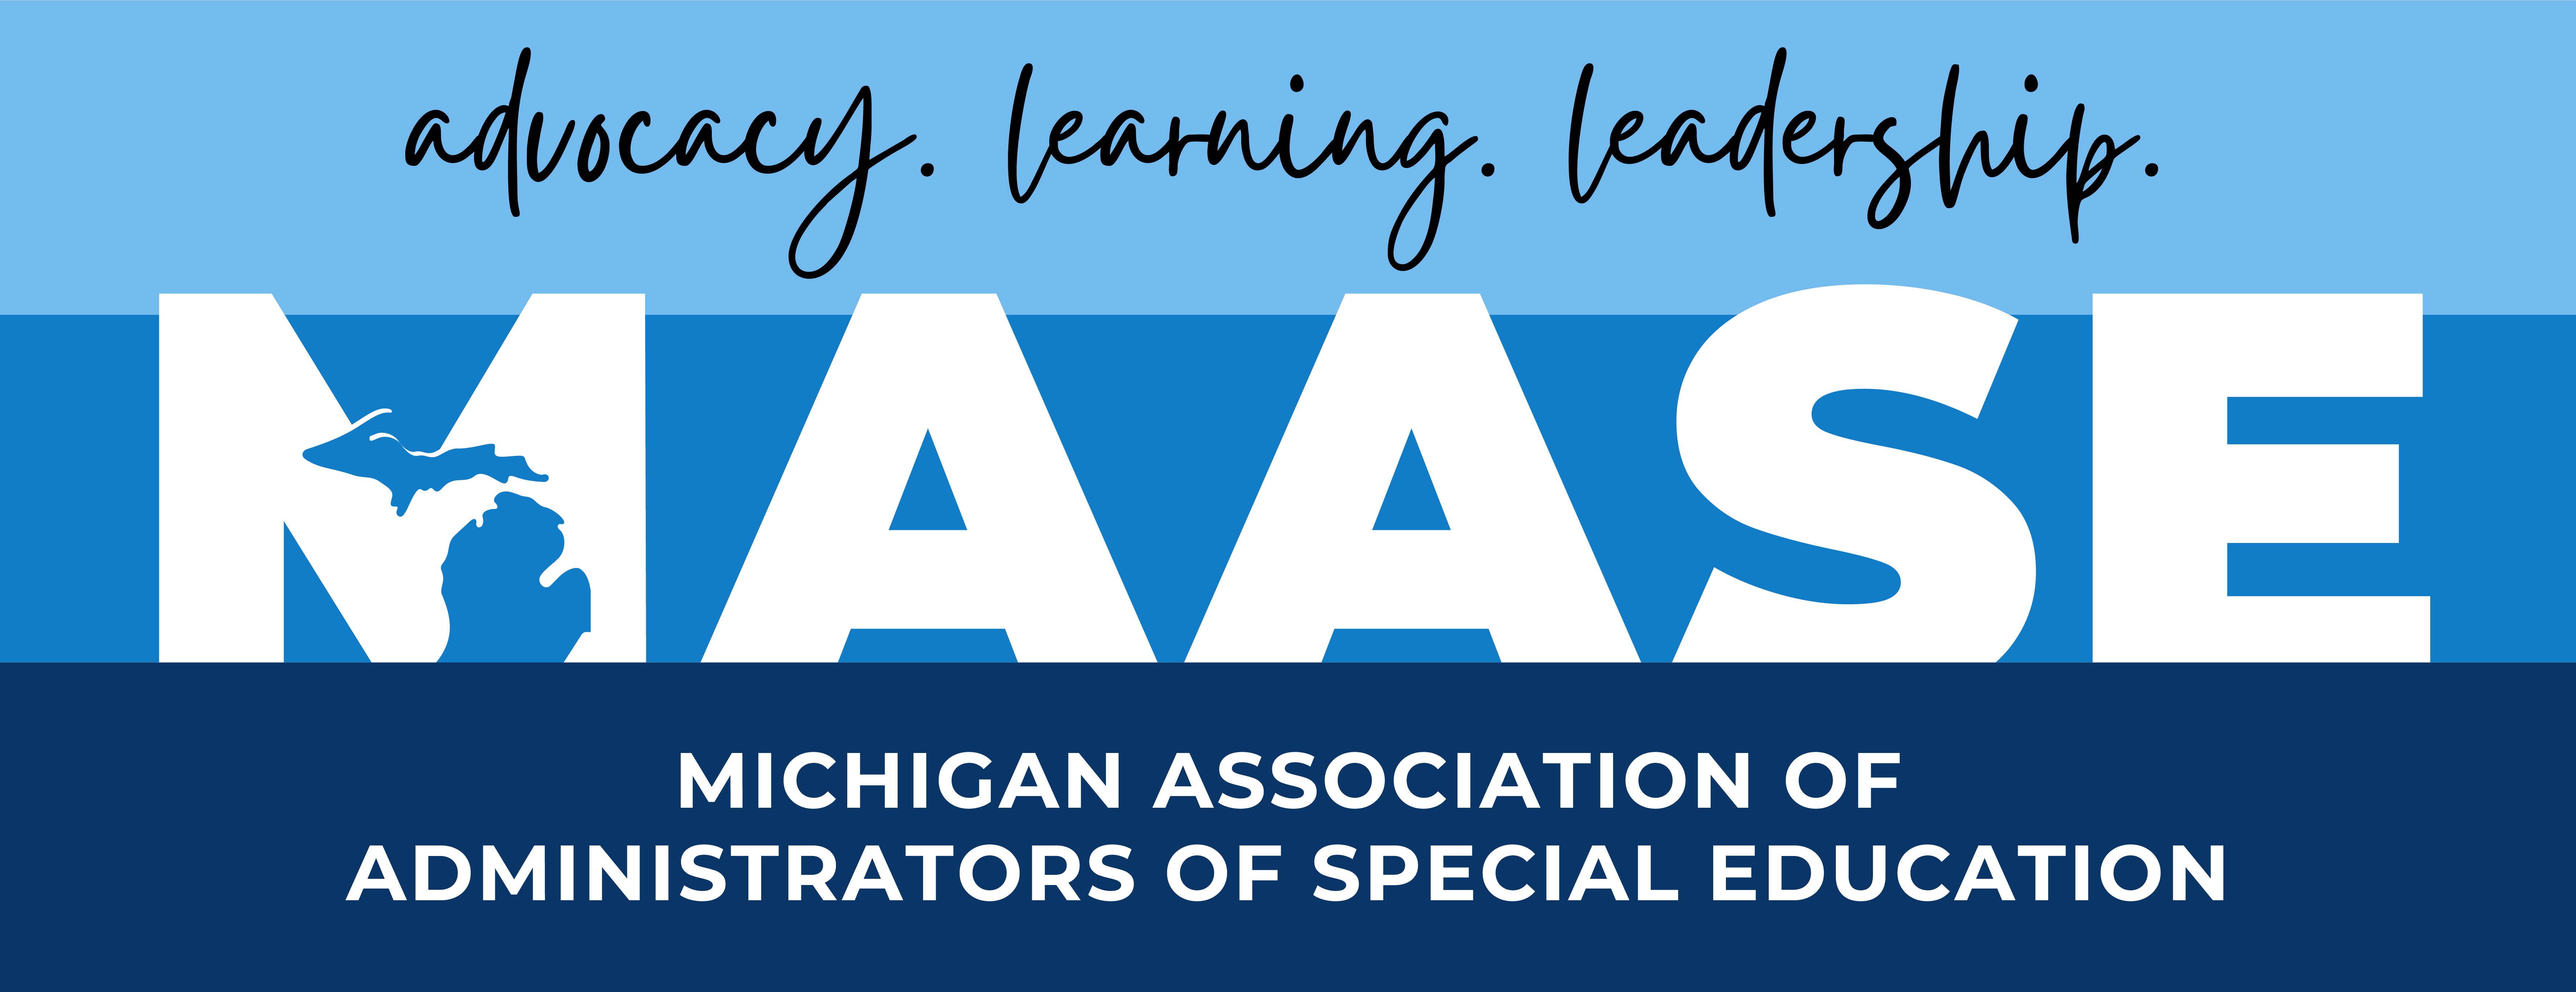 Michigan Association of Administrators of Special Education logo